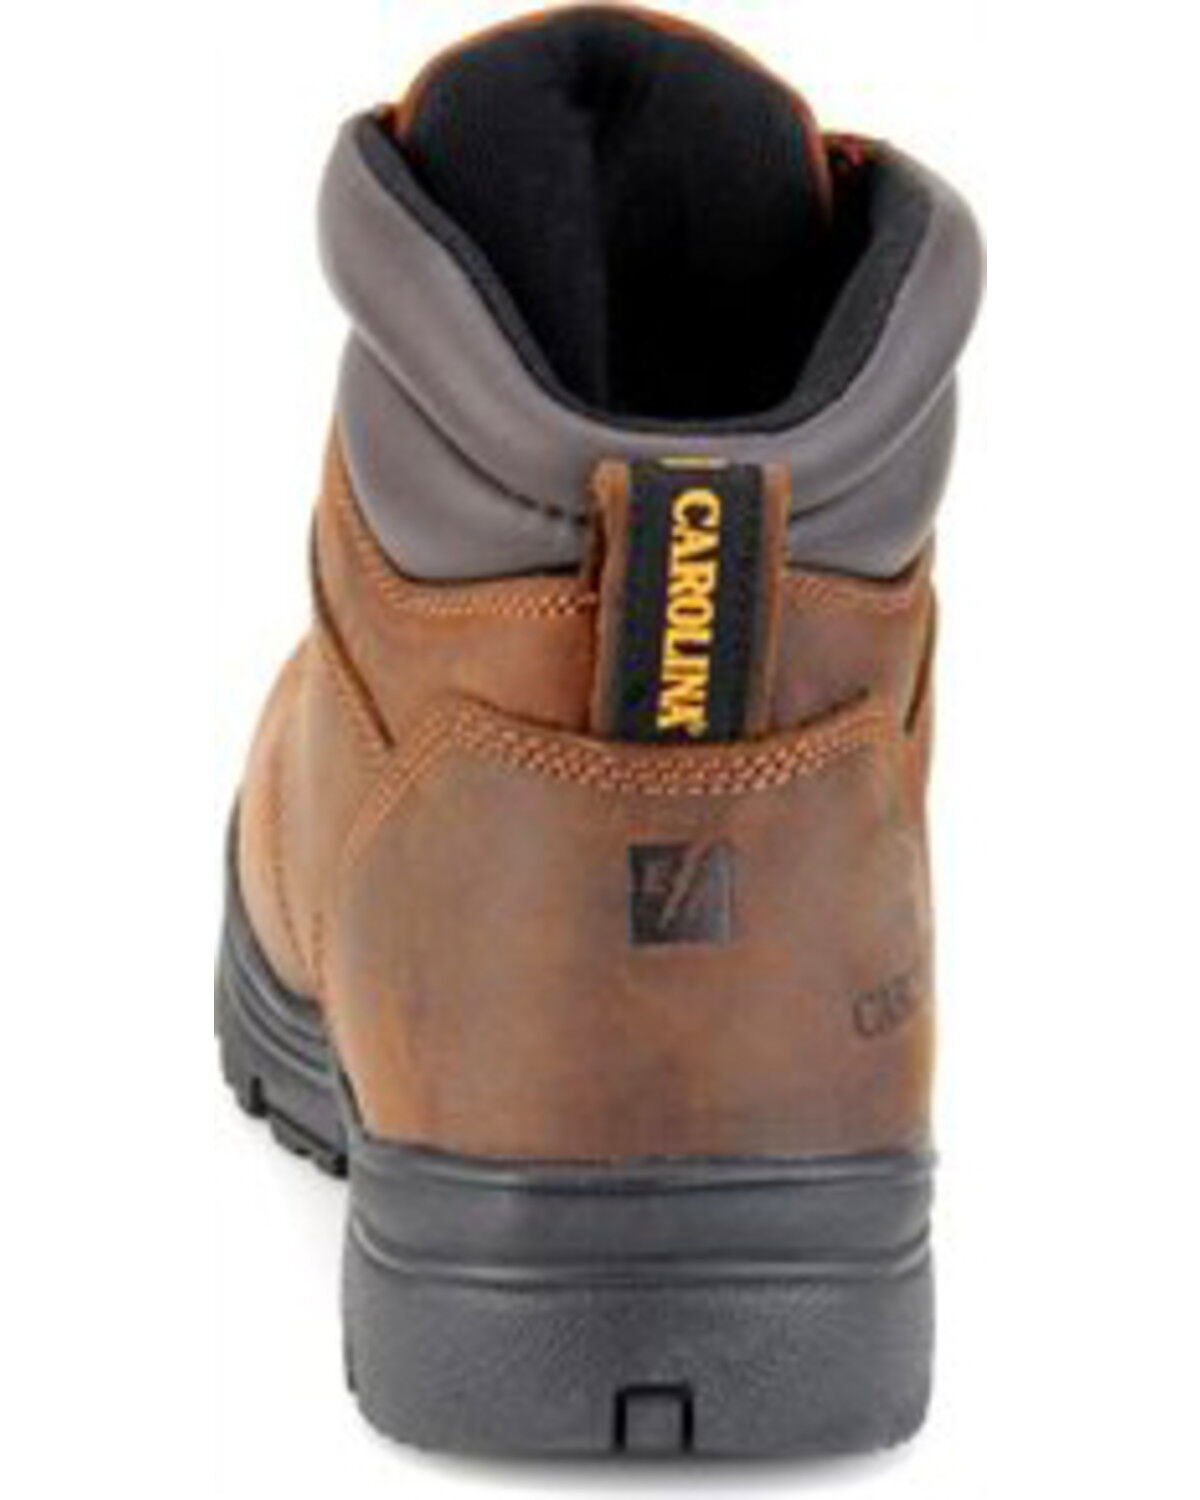 carolina men's 6 steel toe waterproof work boots